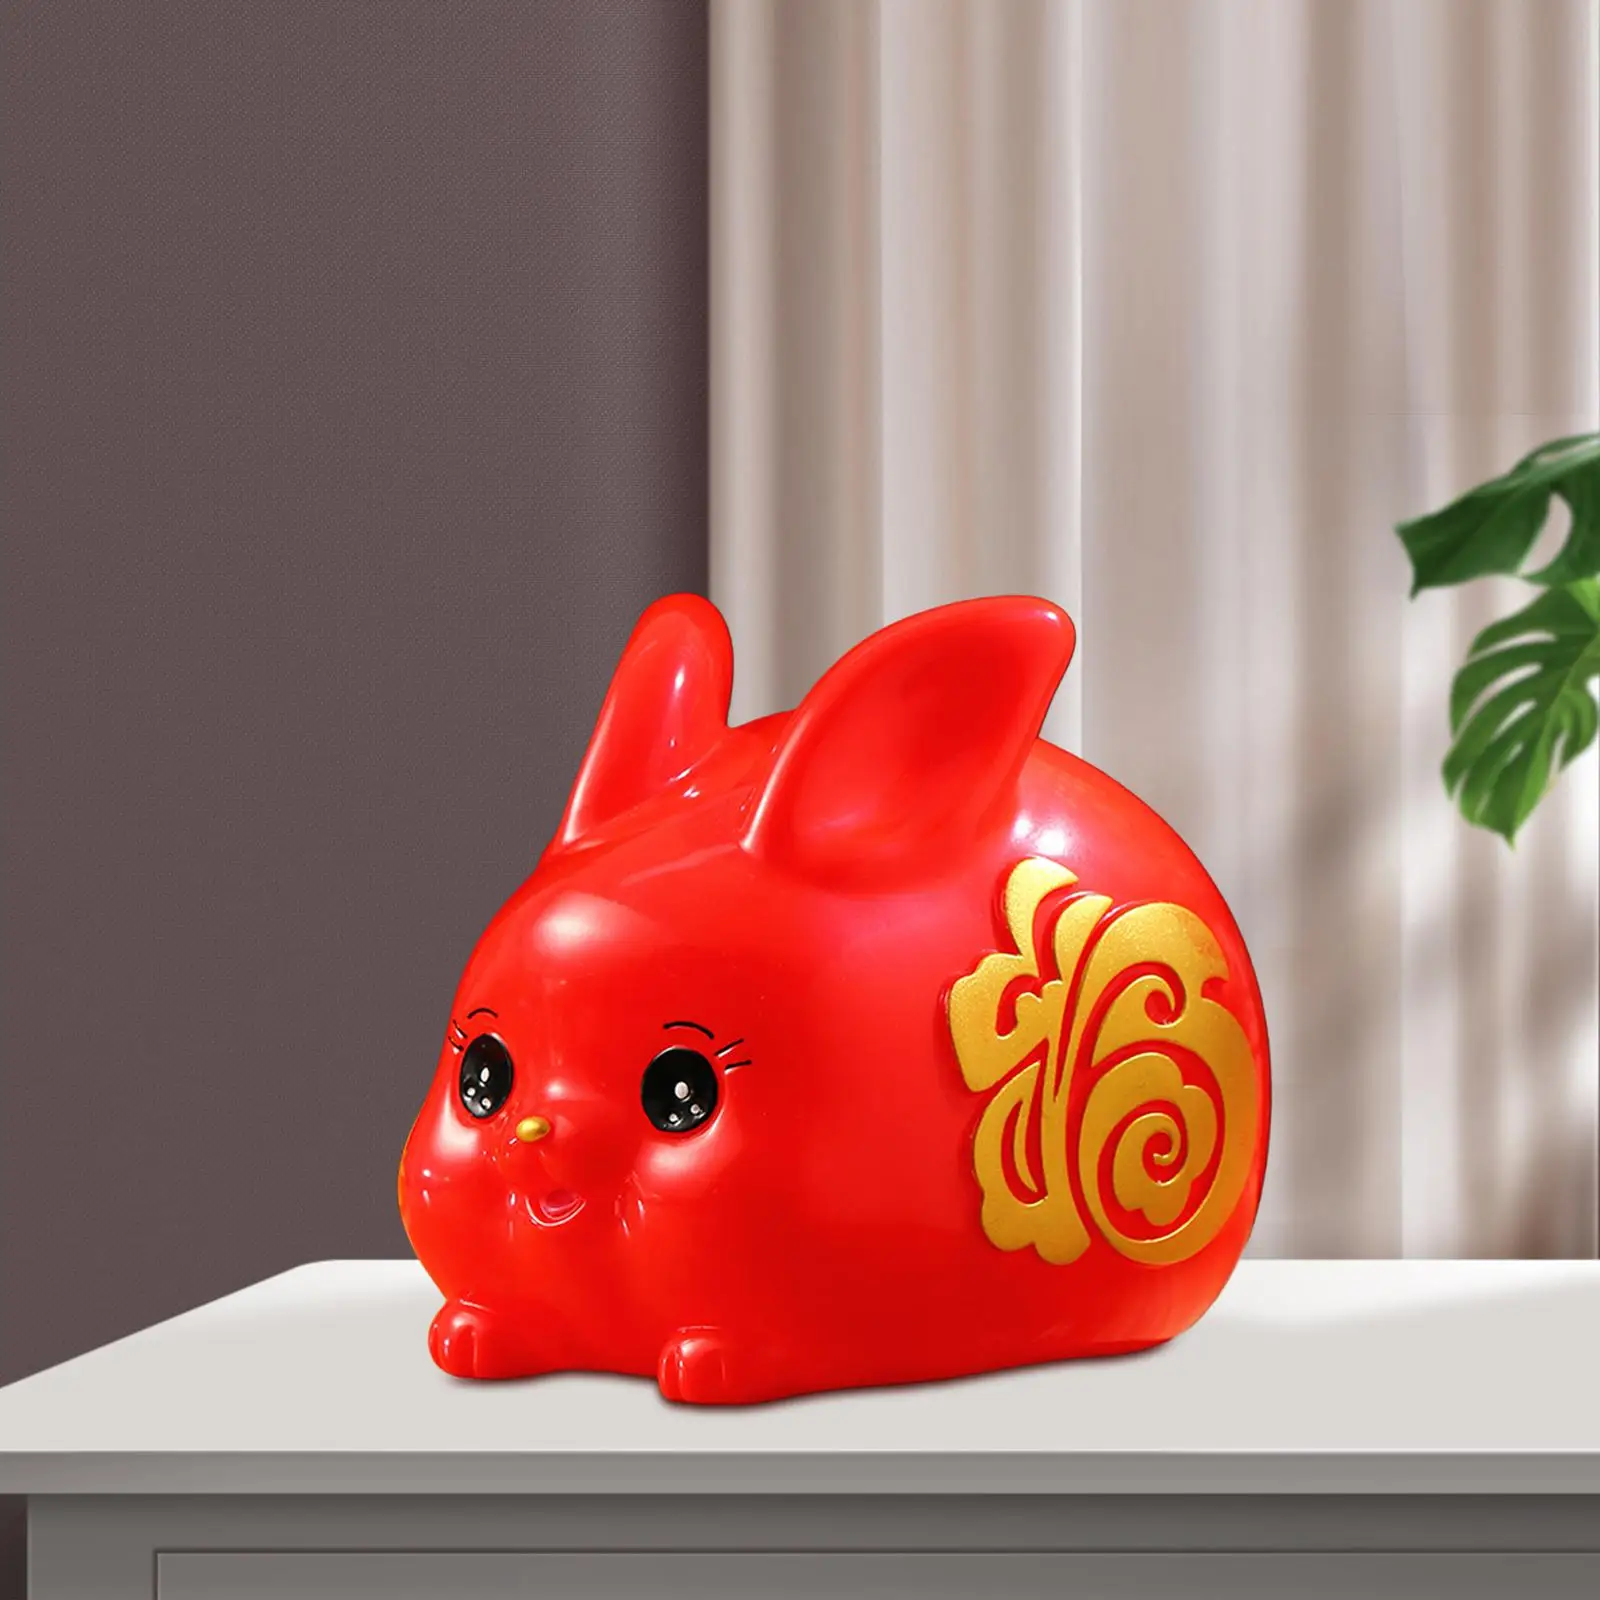 Lucky Rabbit Money Bank Animal Figurine Tabletop Ornament Sculpture Display